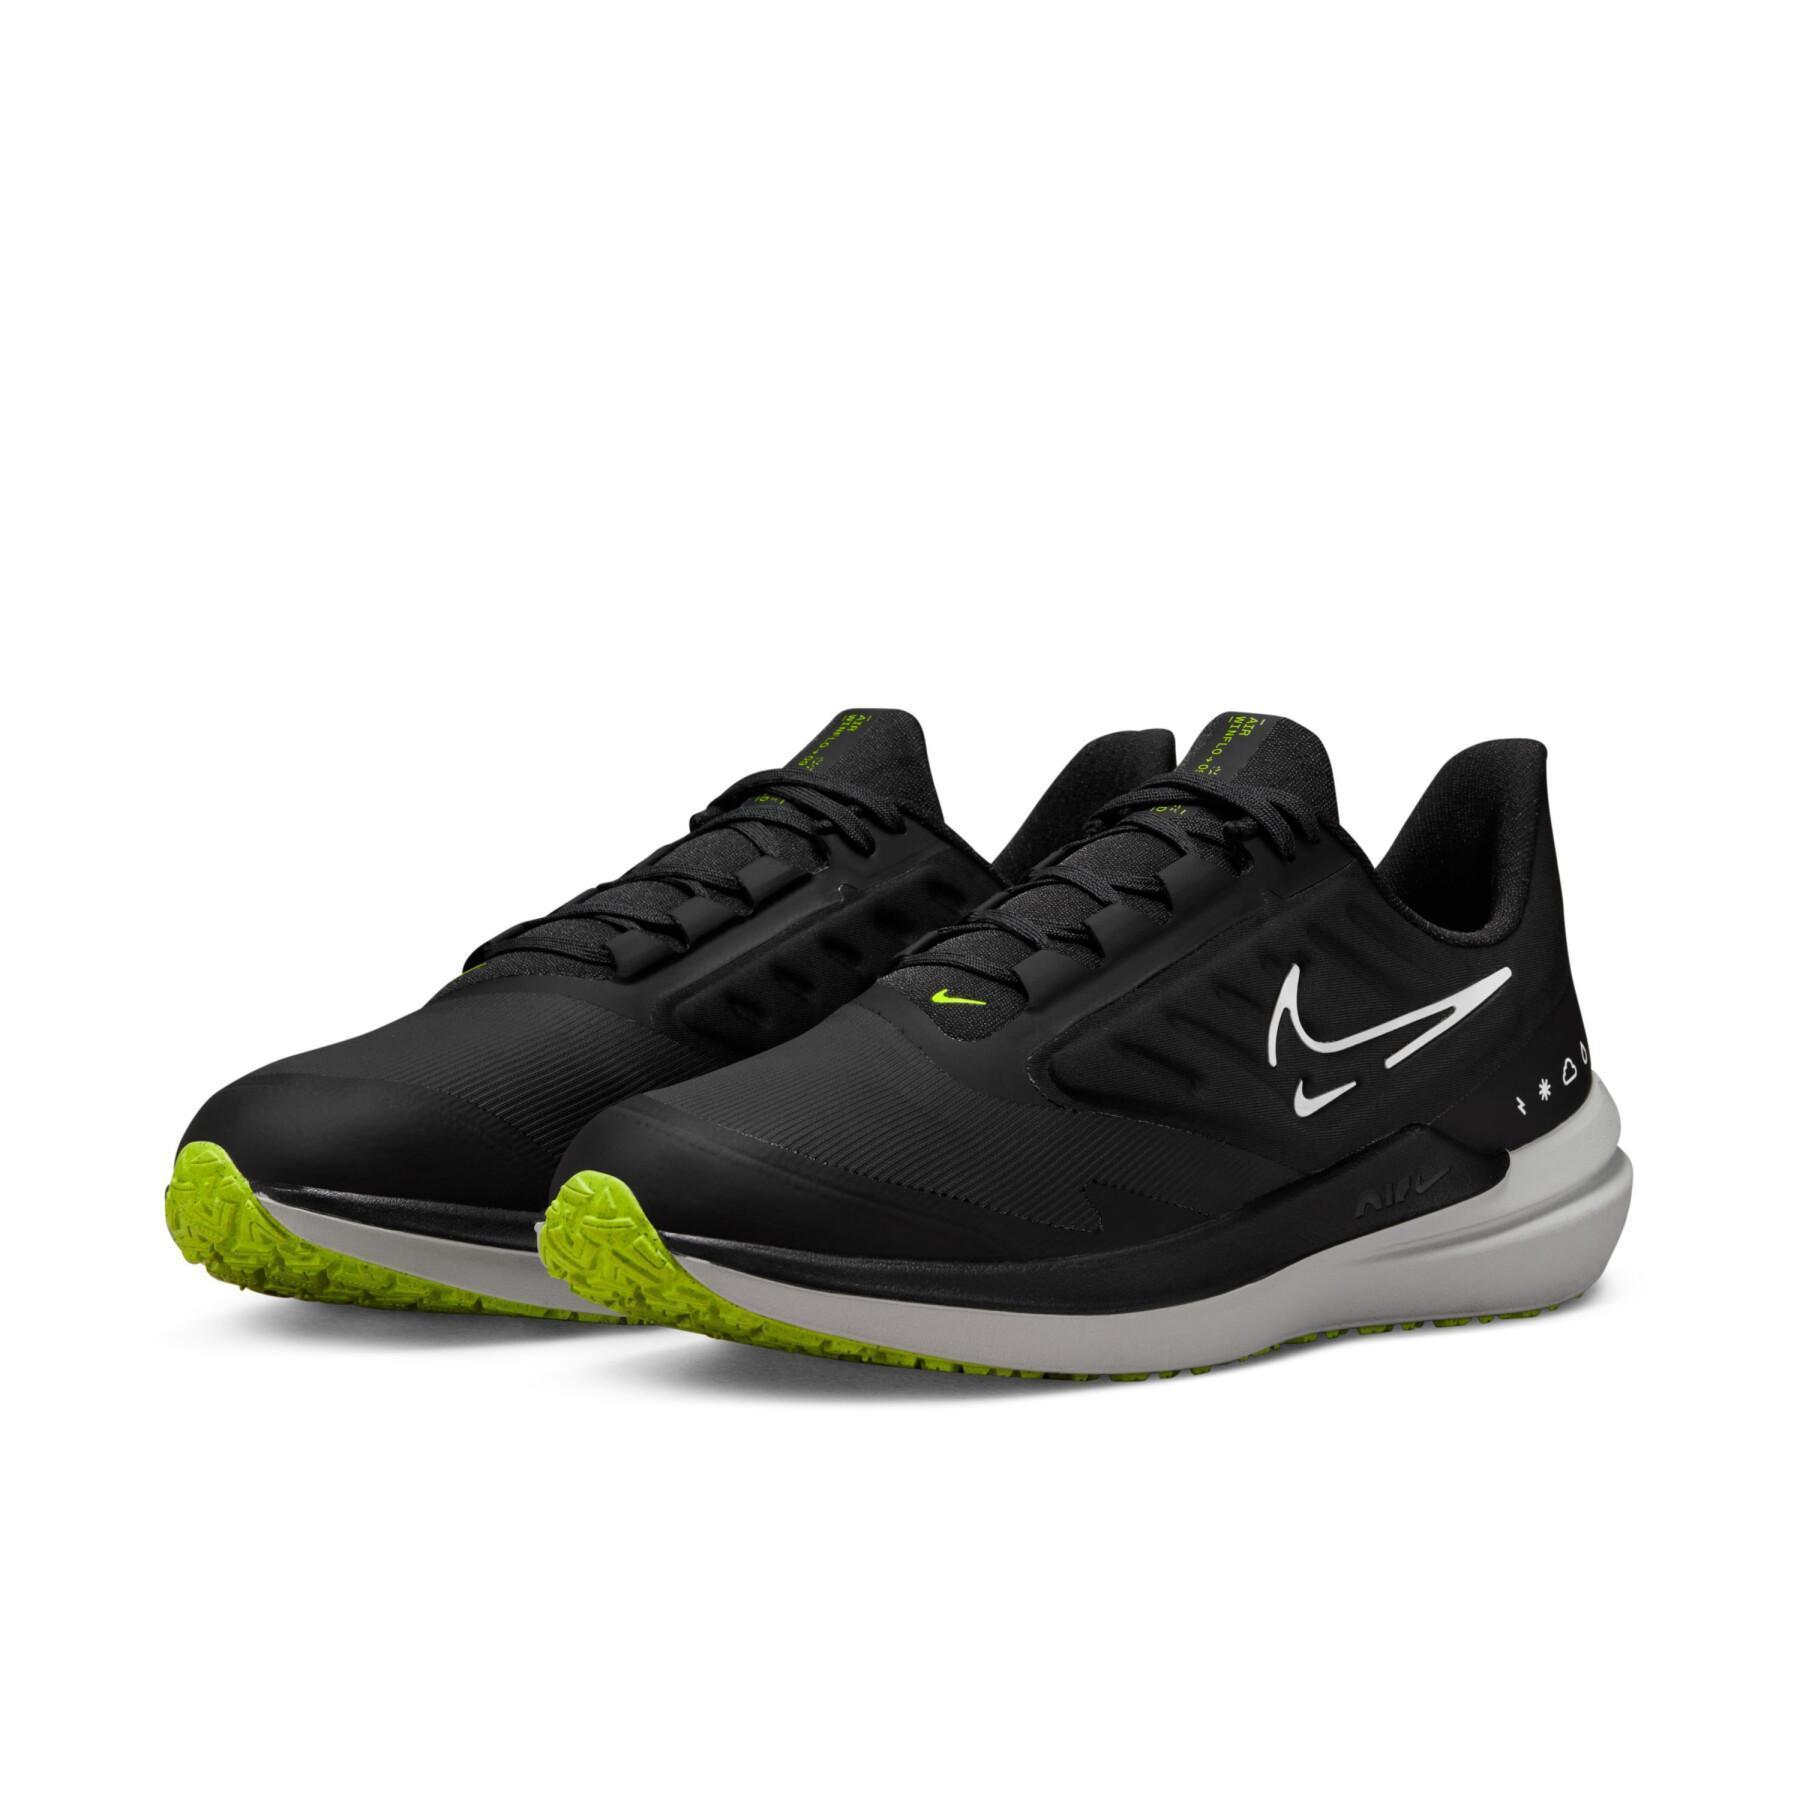 Running shoes Nike Air Winflo 9 Shield